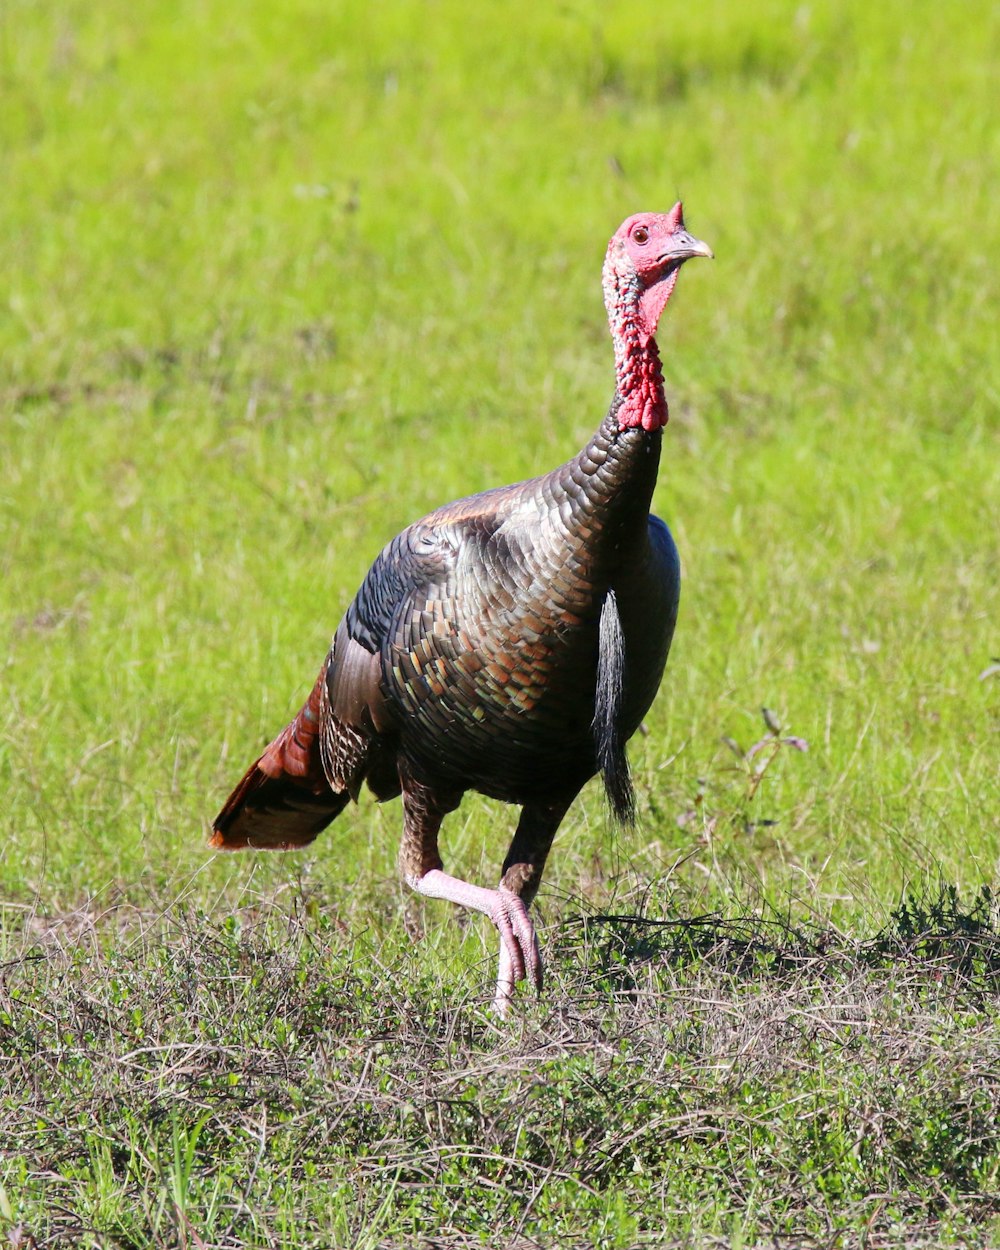 a wild turkey walking through a grassy field